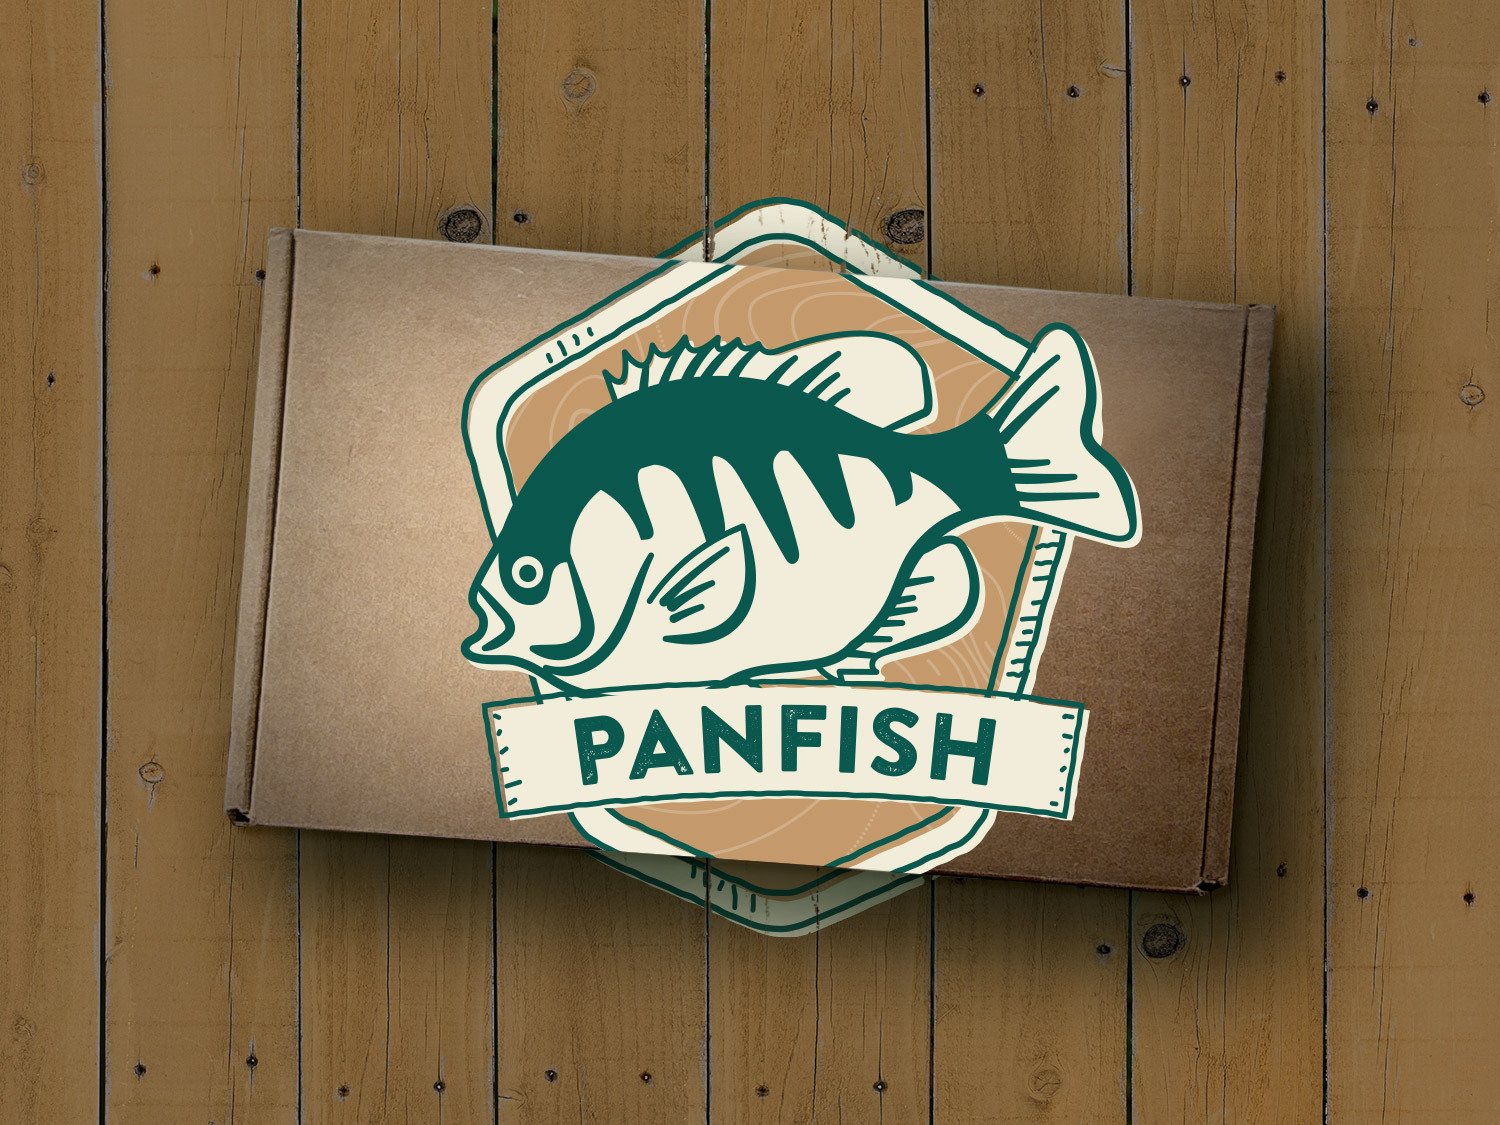 https://shopkarls.com/media/catalog/product/s/p/specialty-box-panfish.jpg